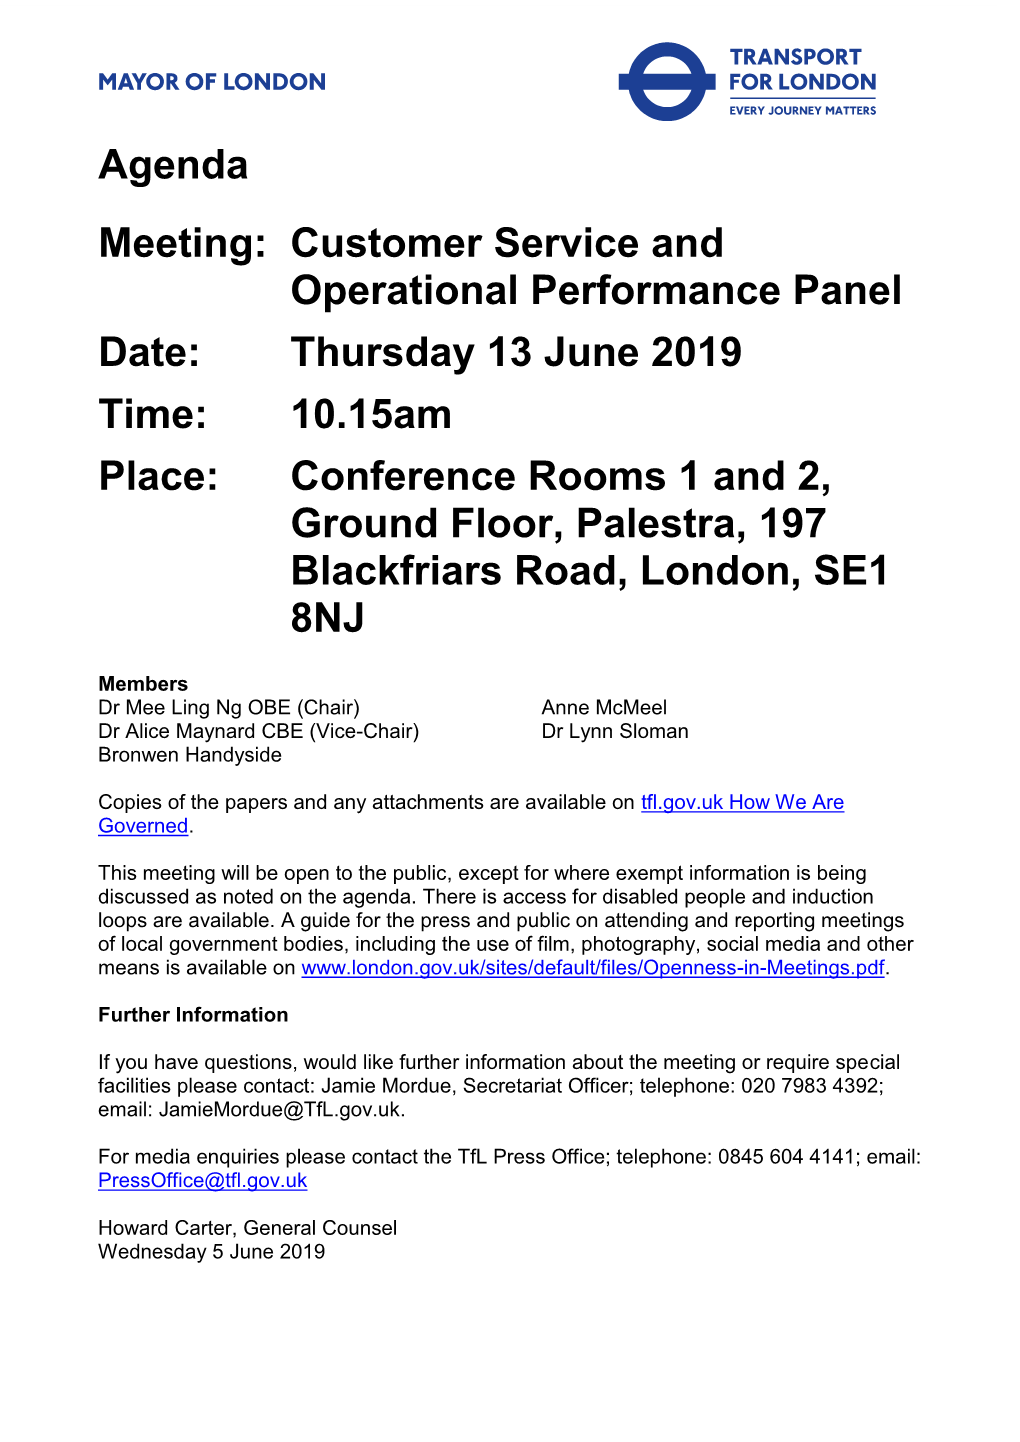 Agenda Customer Service and Operational Performance Panel Thursday 13 June 2019